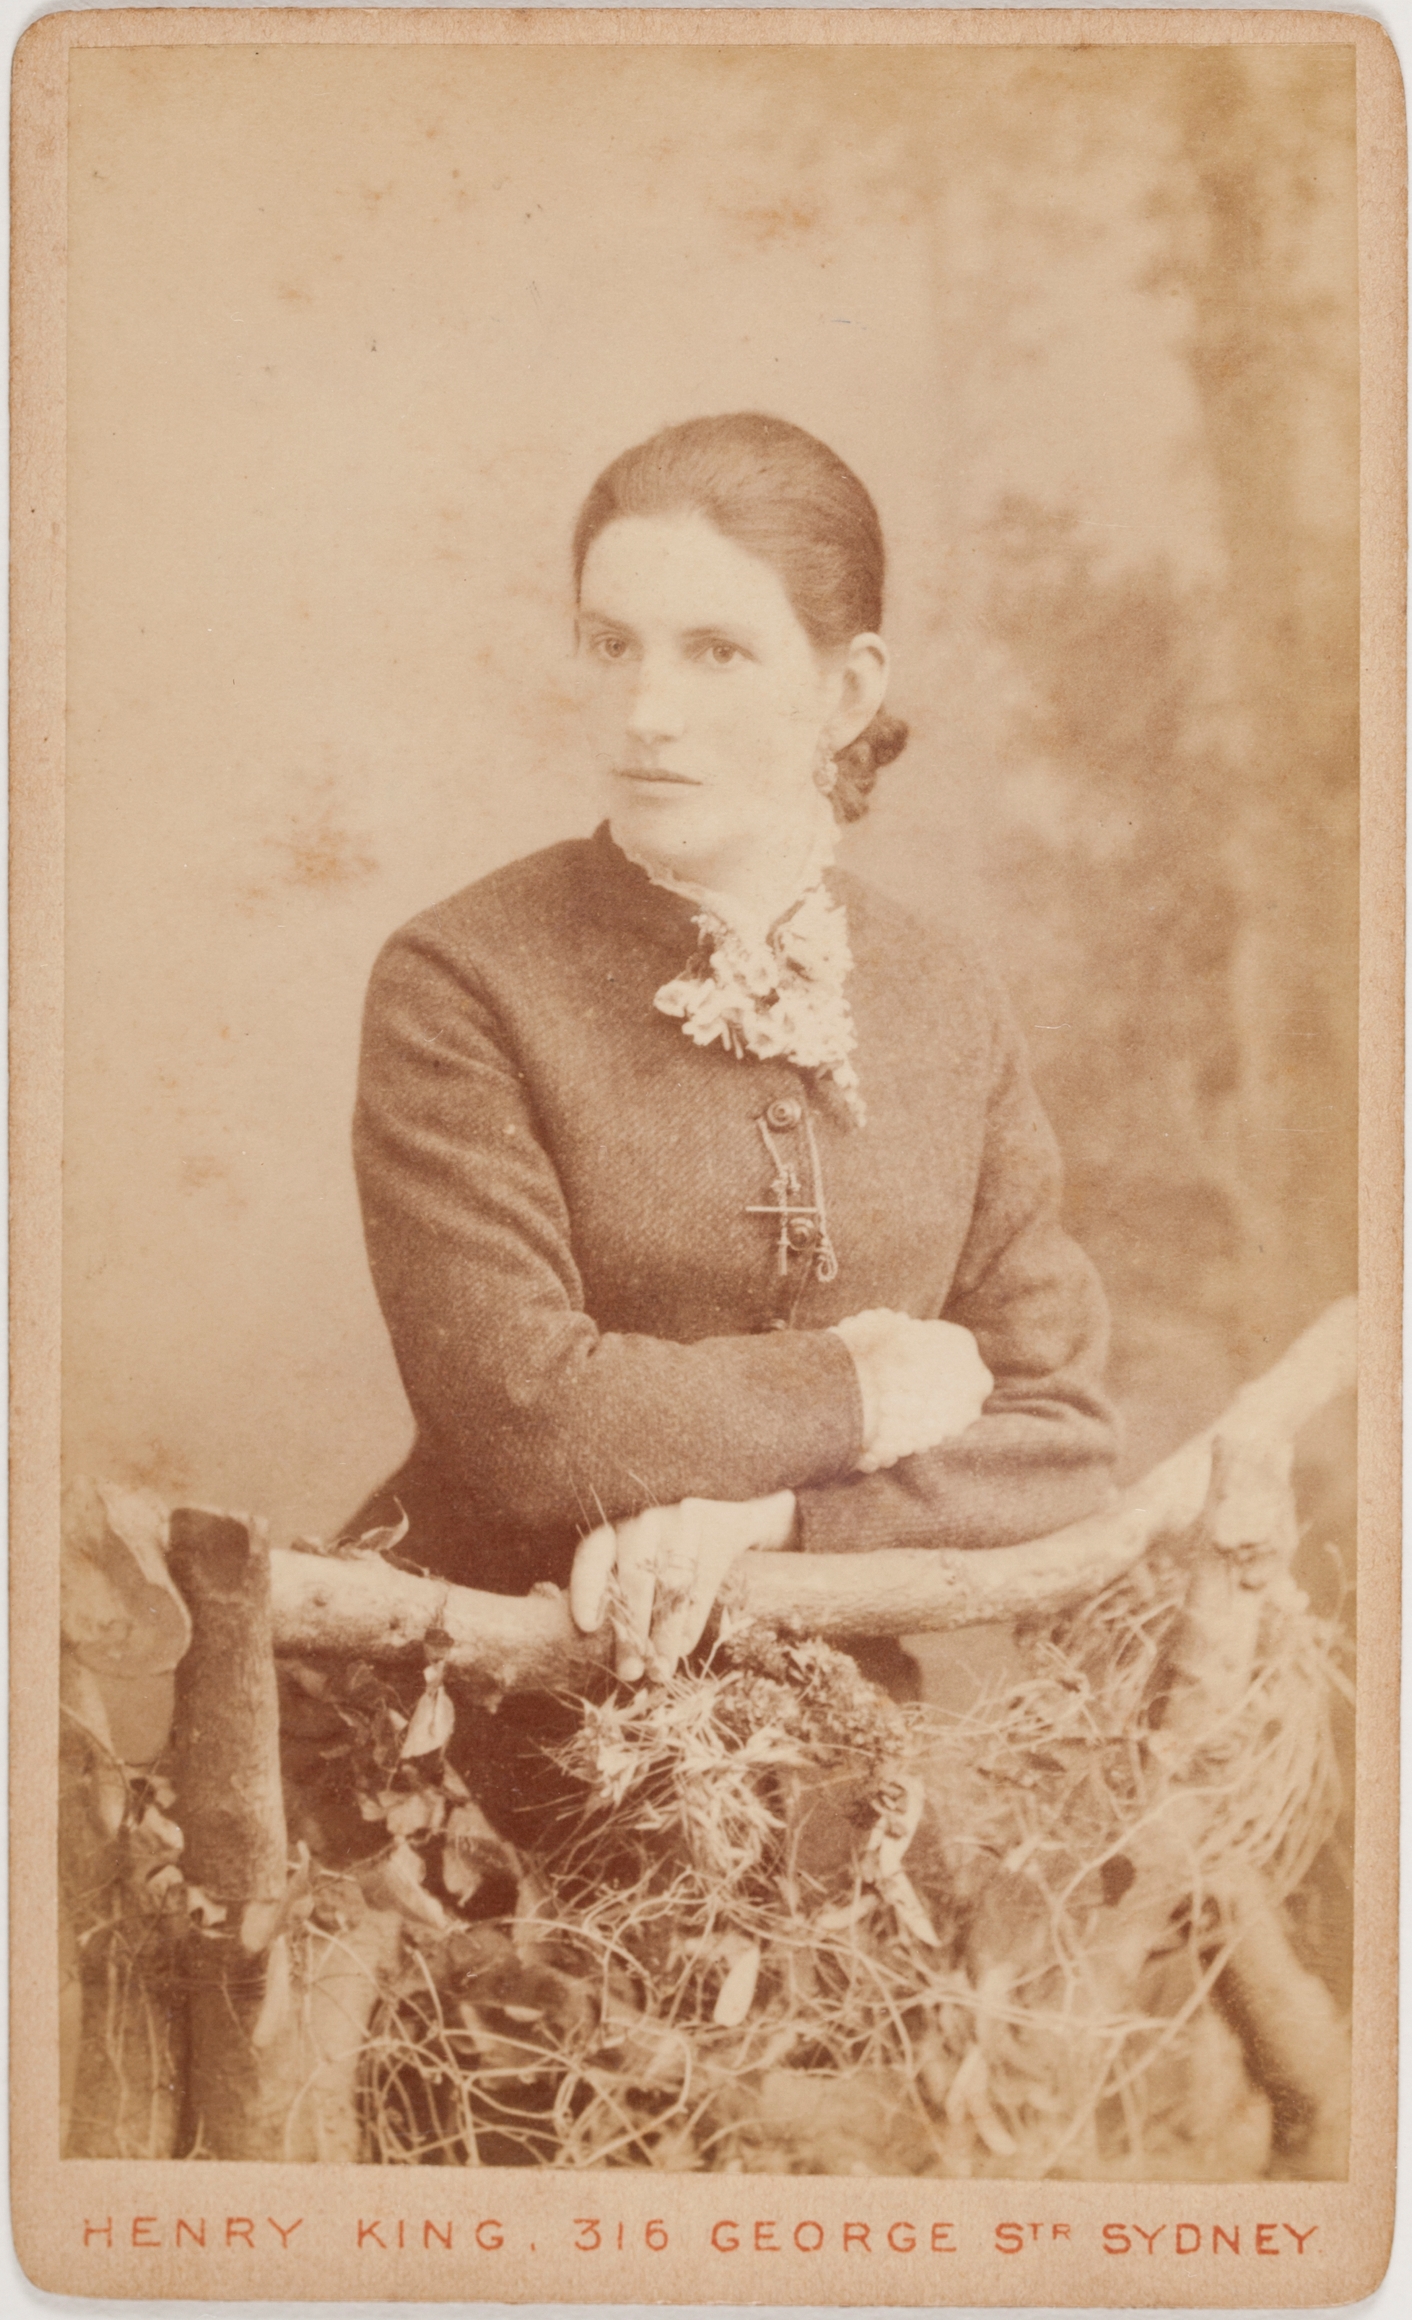 Margaret Hannah Stafford, nee Thorburn, around 1884 / Henry King